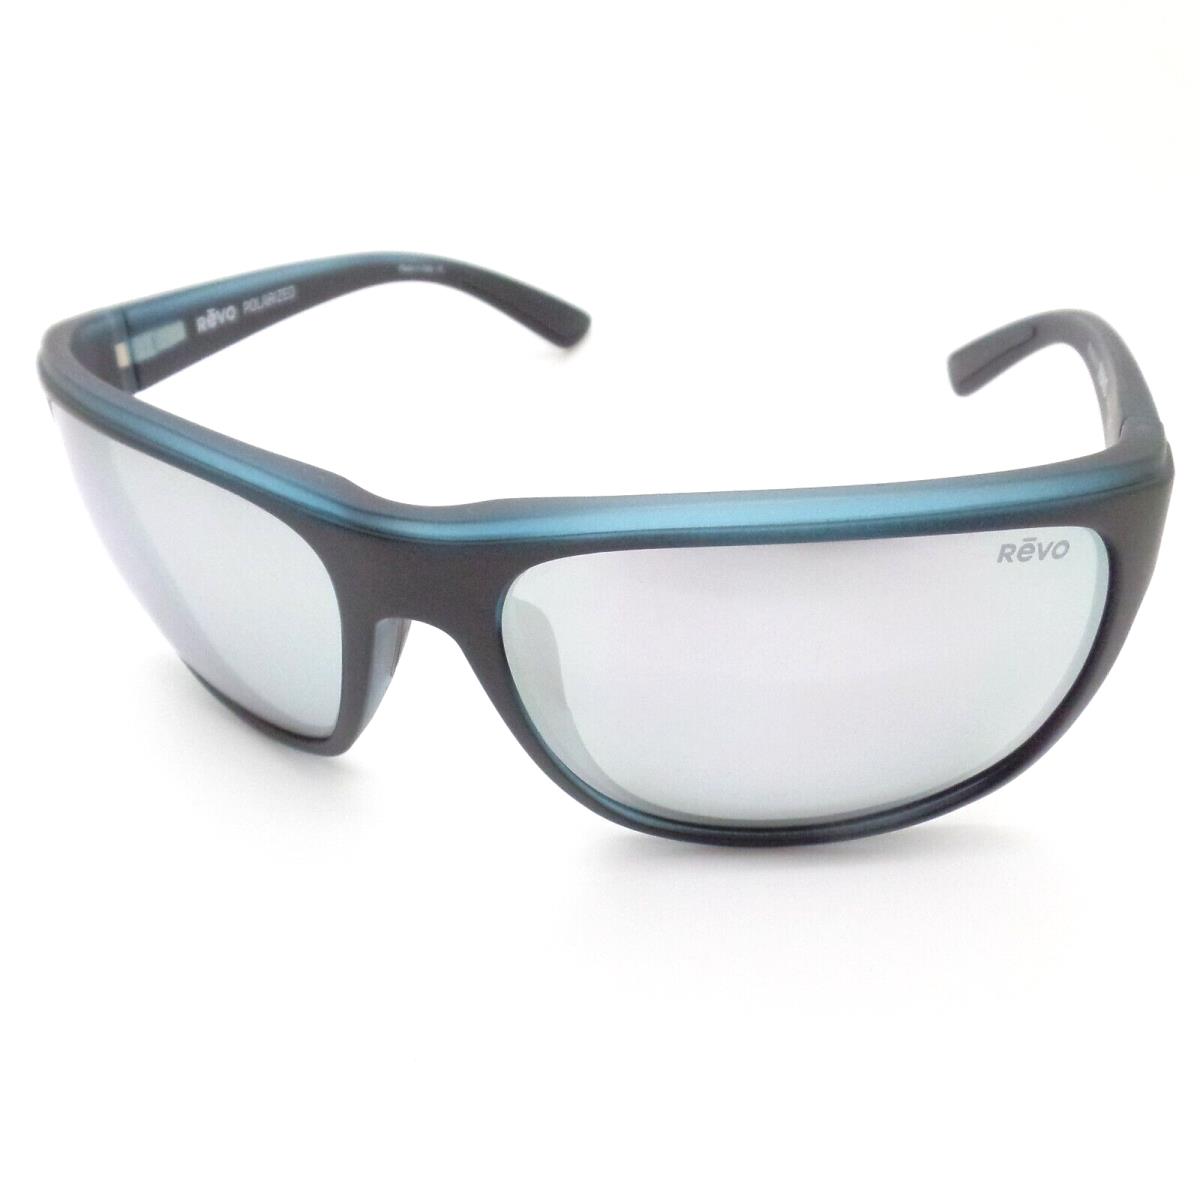 Revo sunglasses  - Matte Black Grey Frame 0